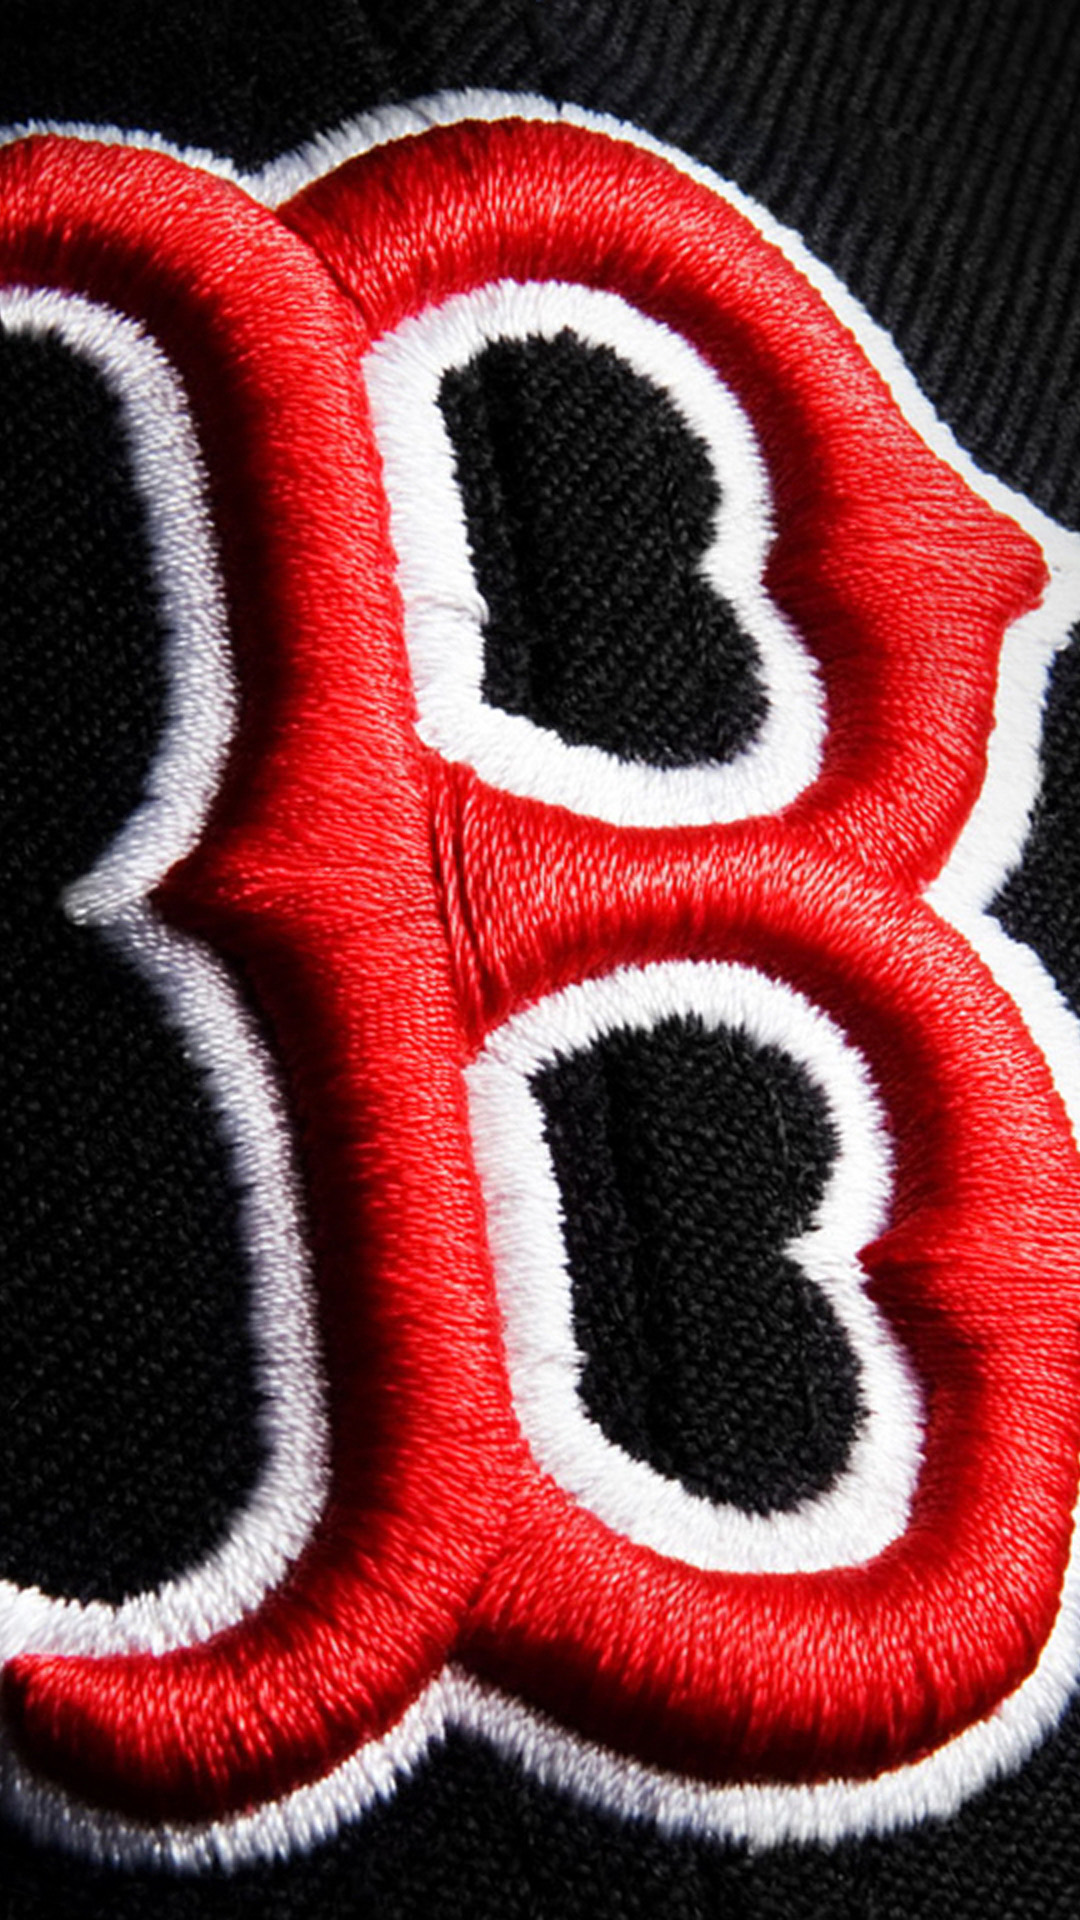 Boston Red Sox Cap Wallpaper For Galaxy S5